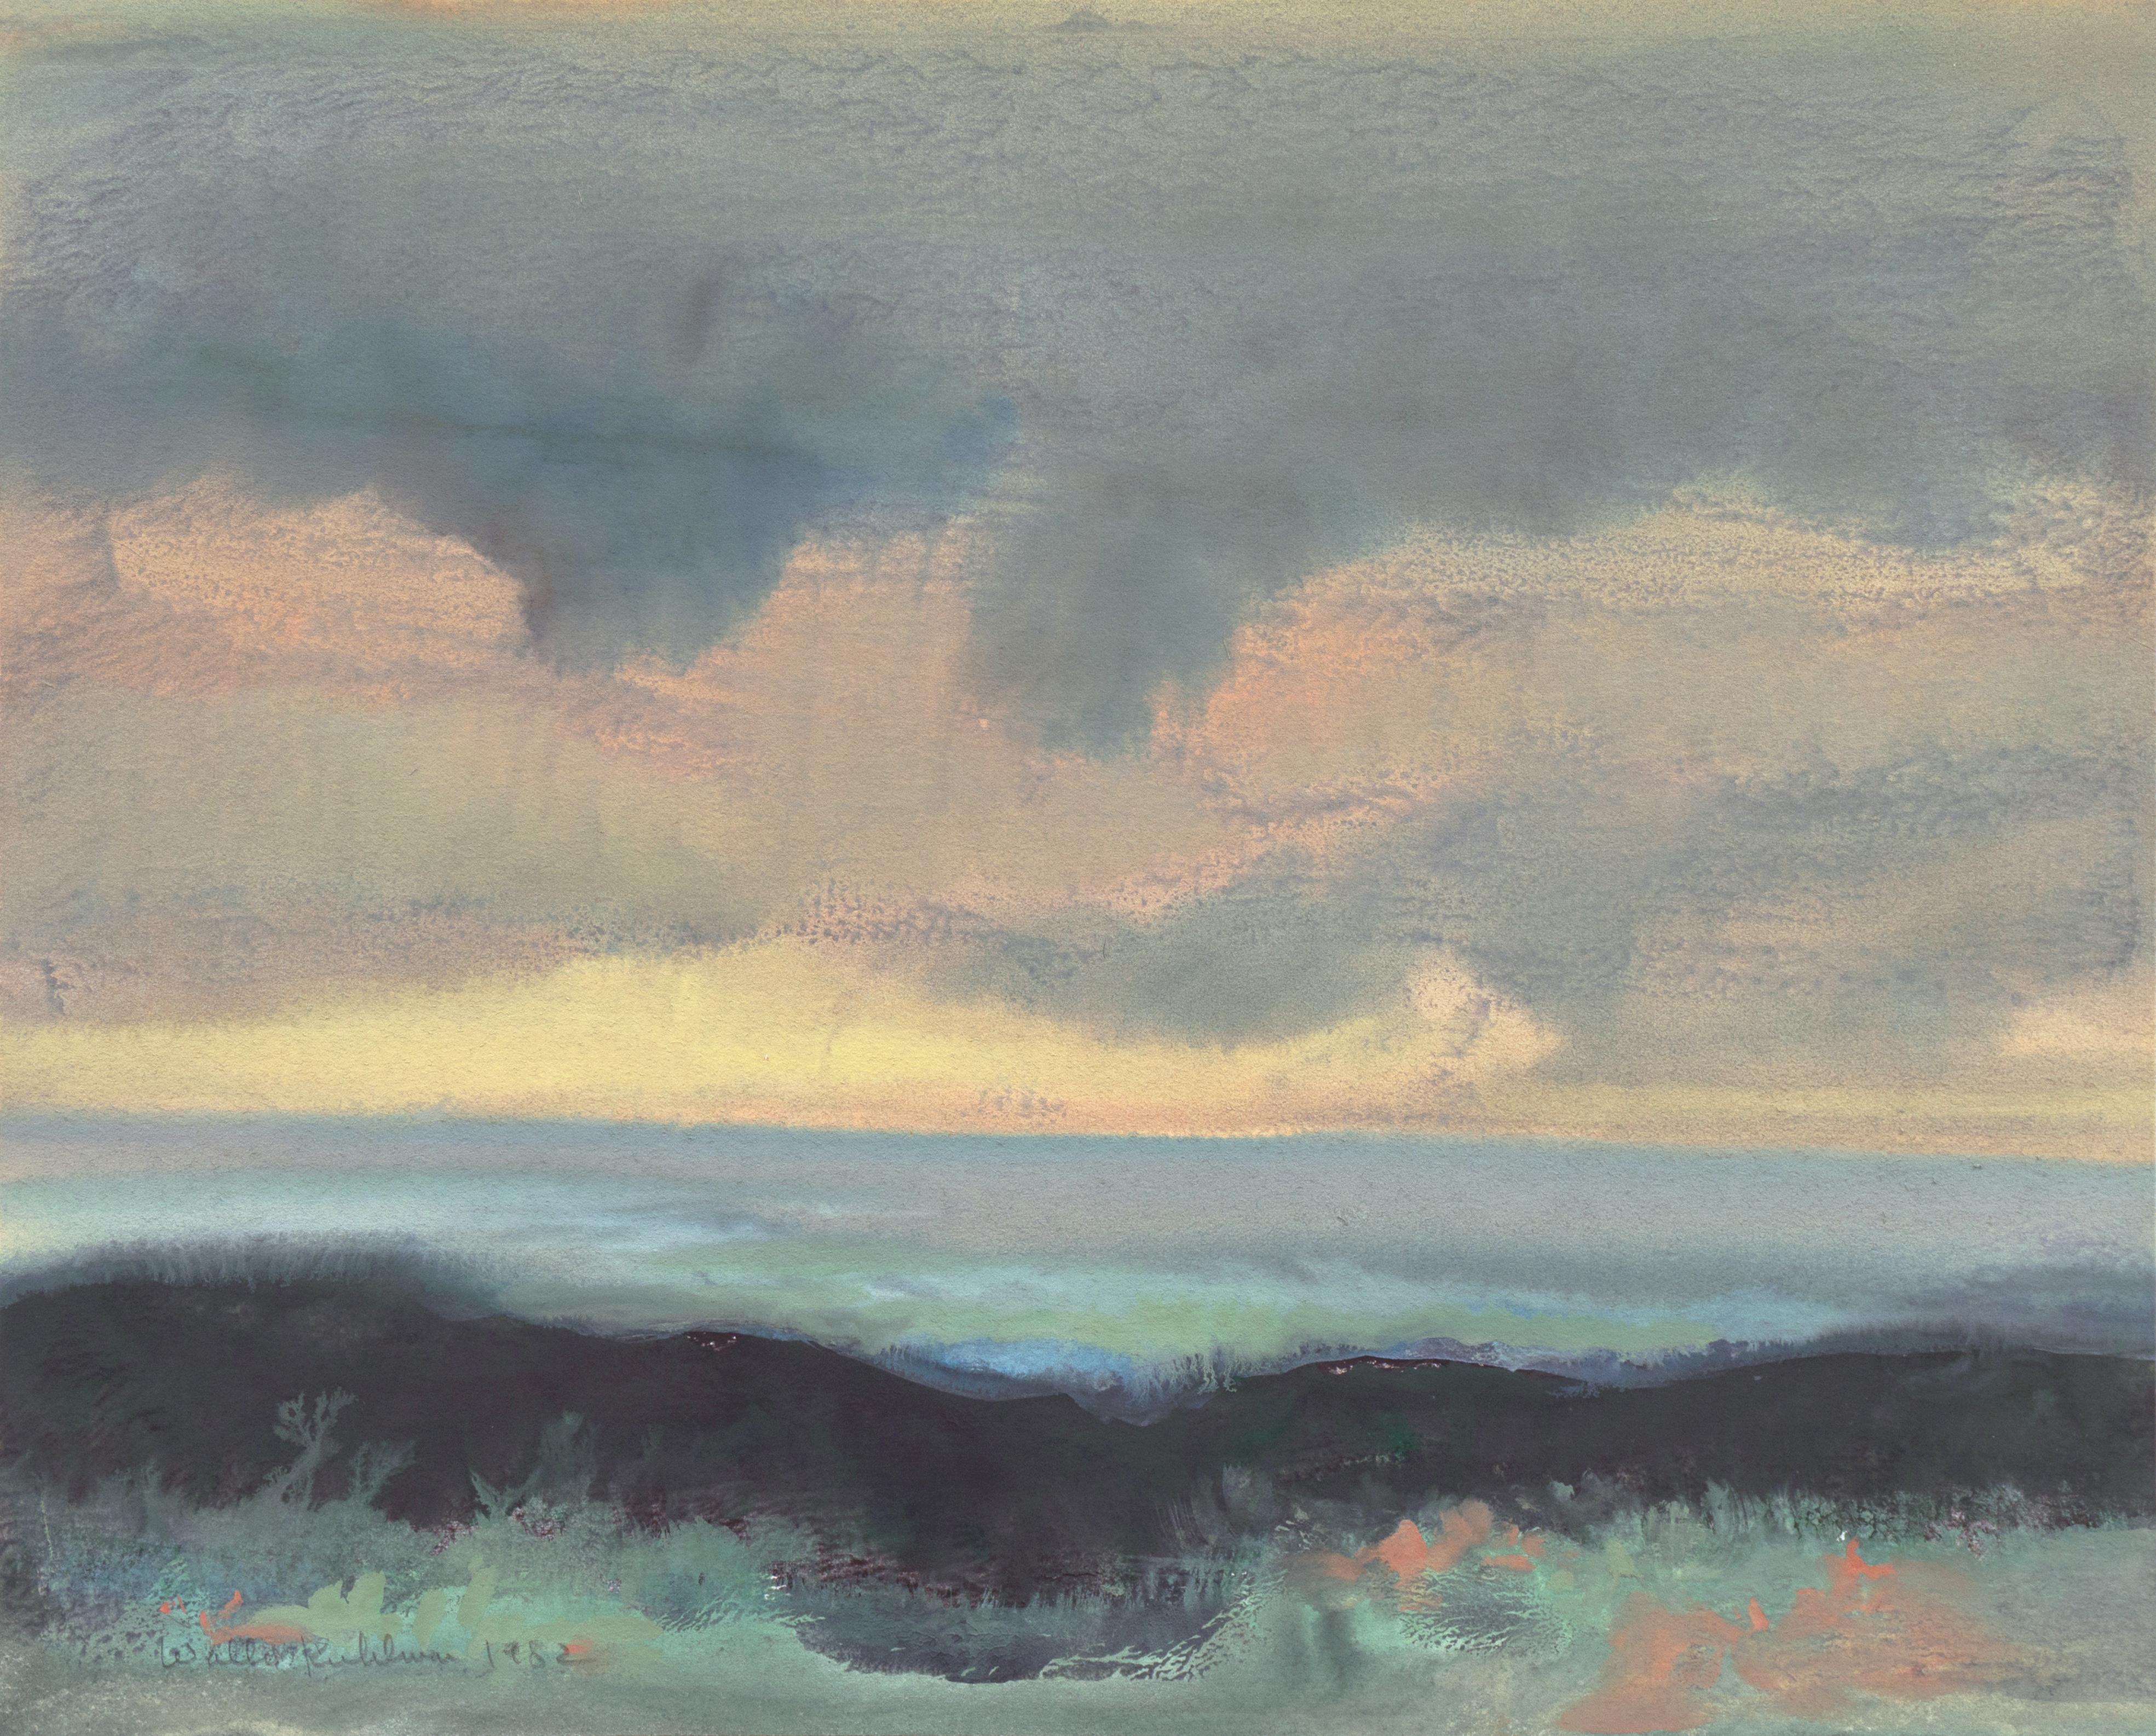 Walter Kuhlman Abstract Drawing - Ocean Landscape  (Small, Abstract Expressionism, Bay Area, San Francisco)